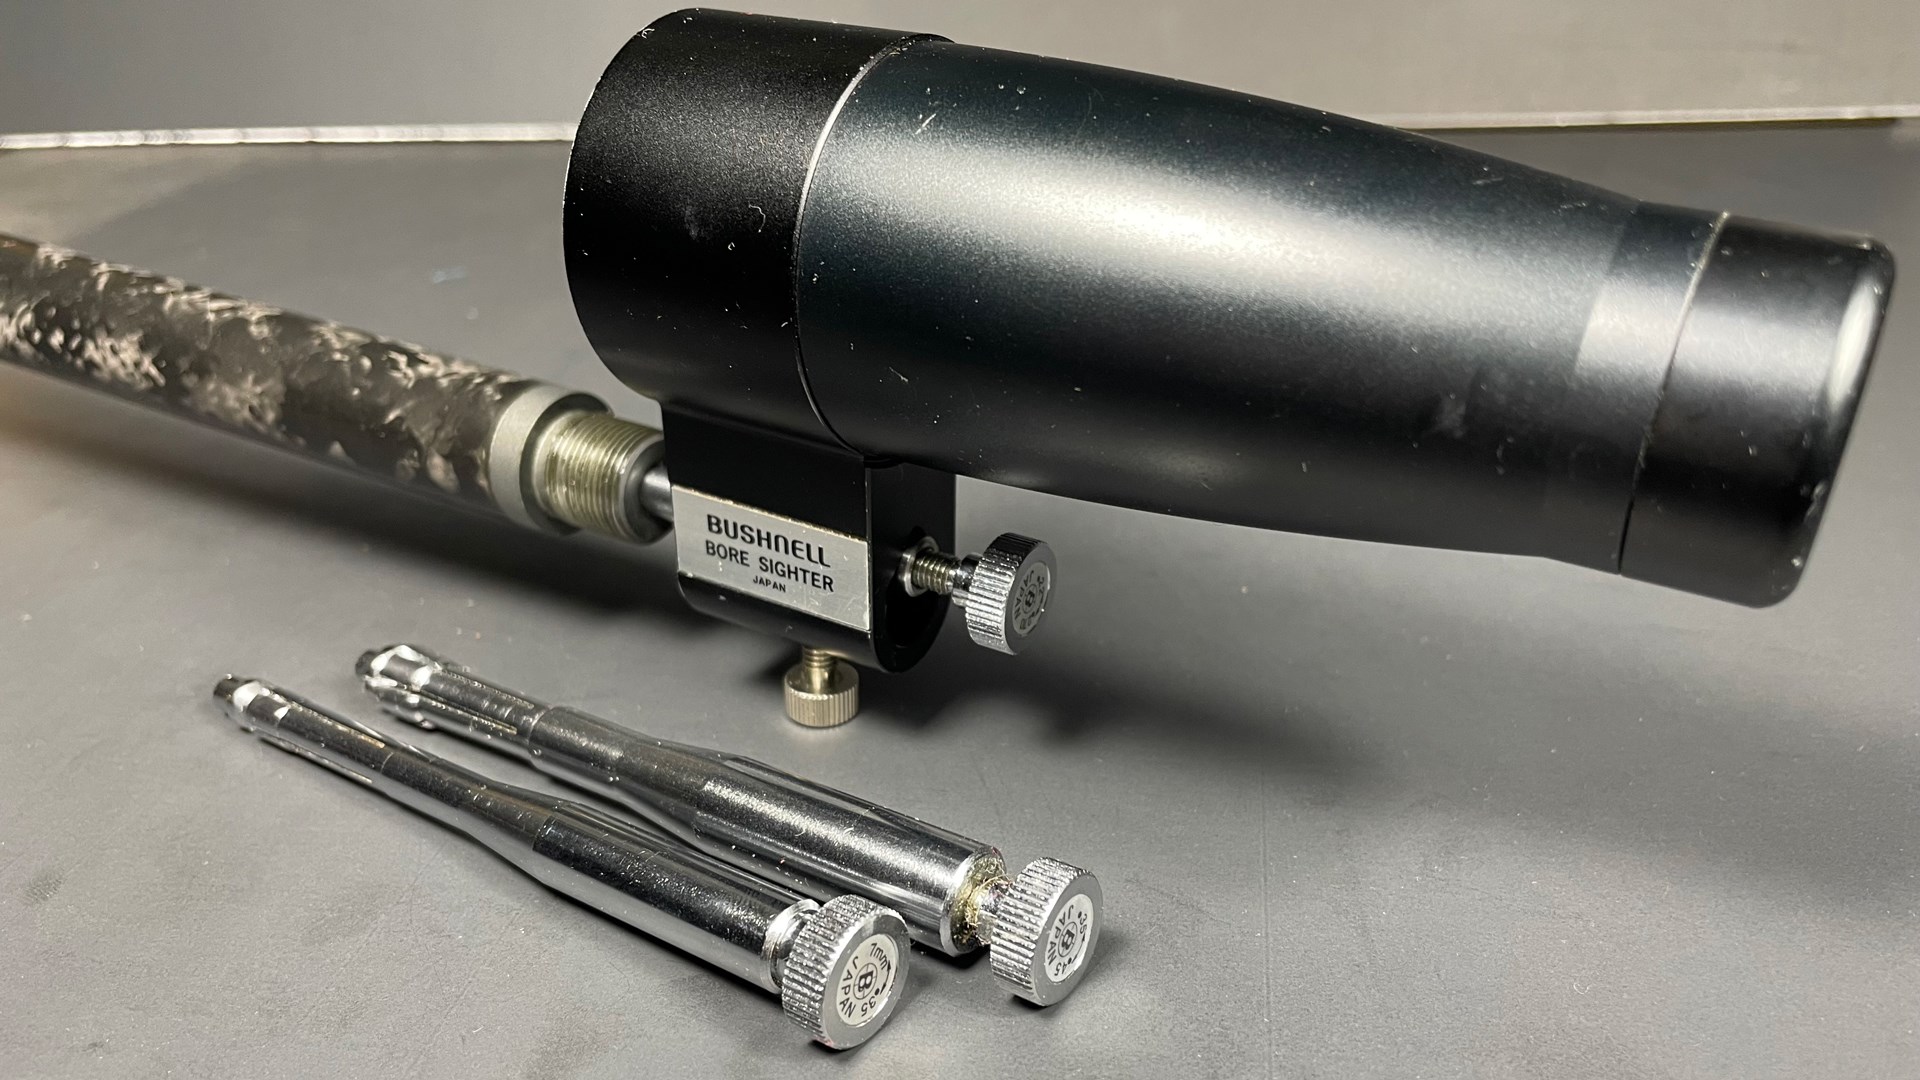 black round cylinder attached to carbon-fiber barrel tool Bushnell bore sighter